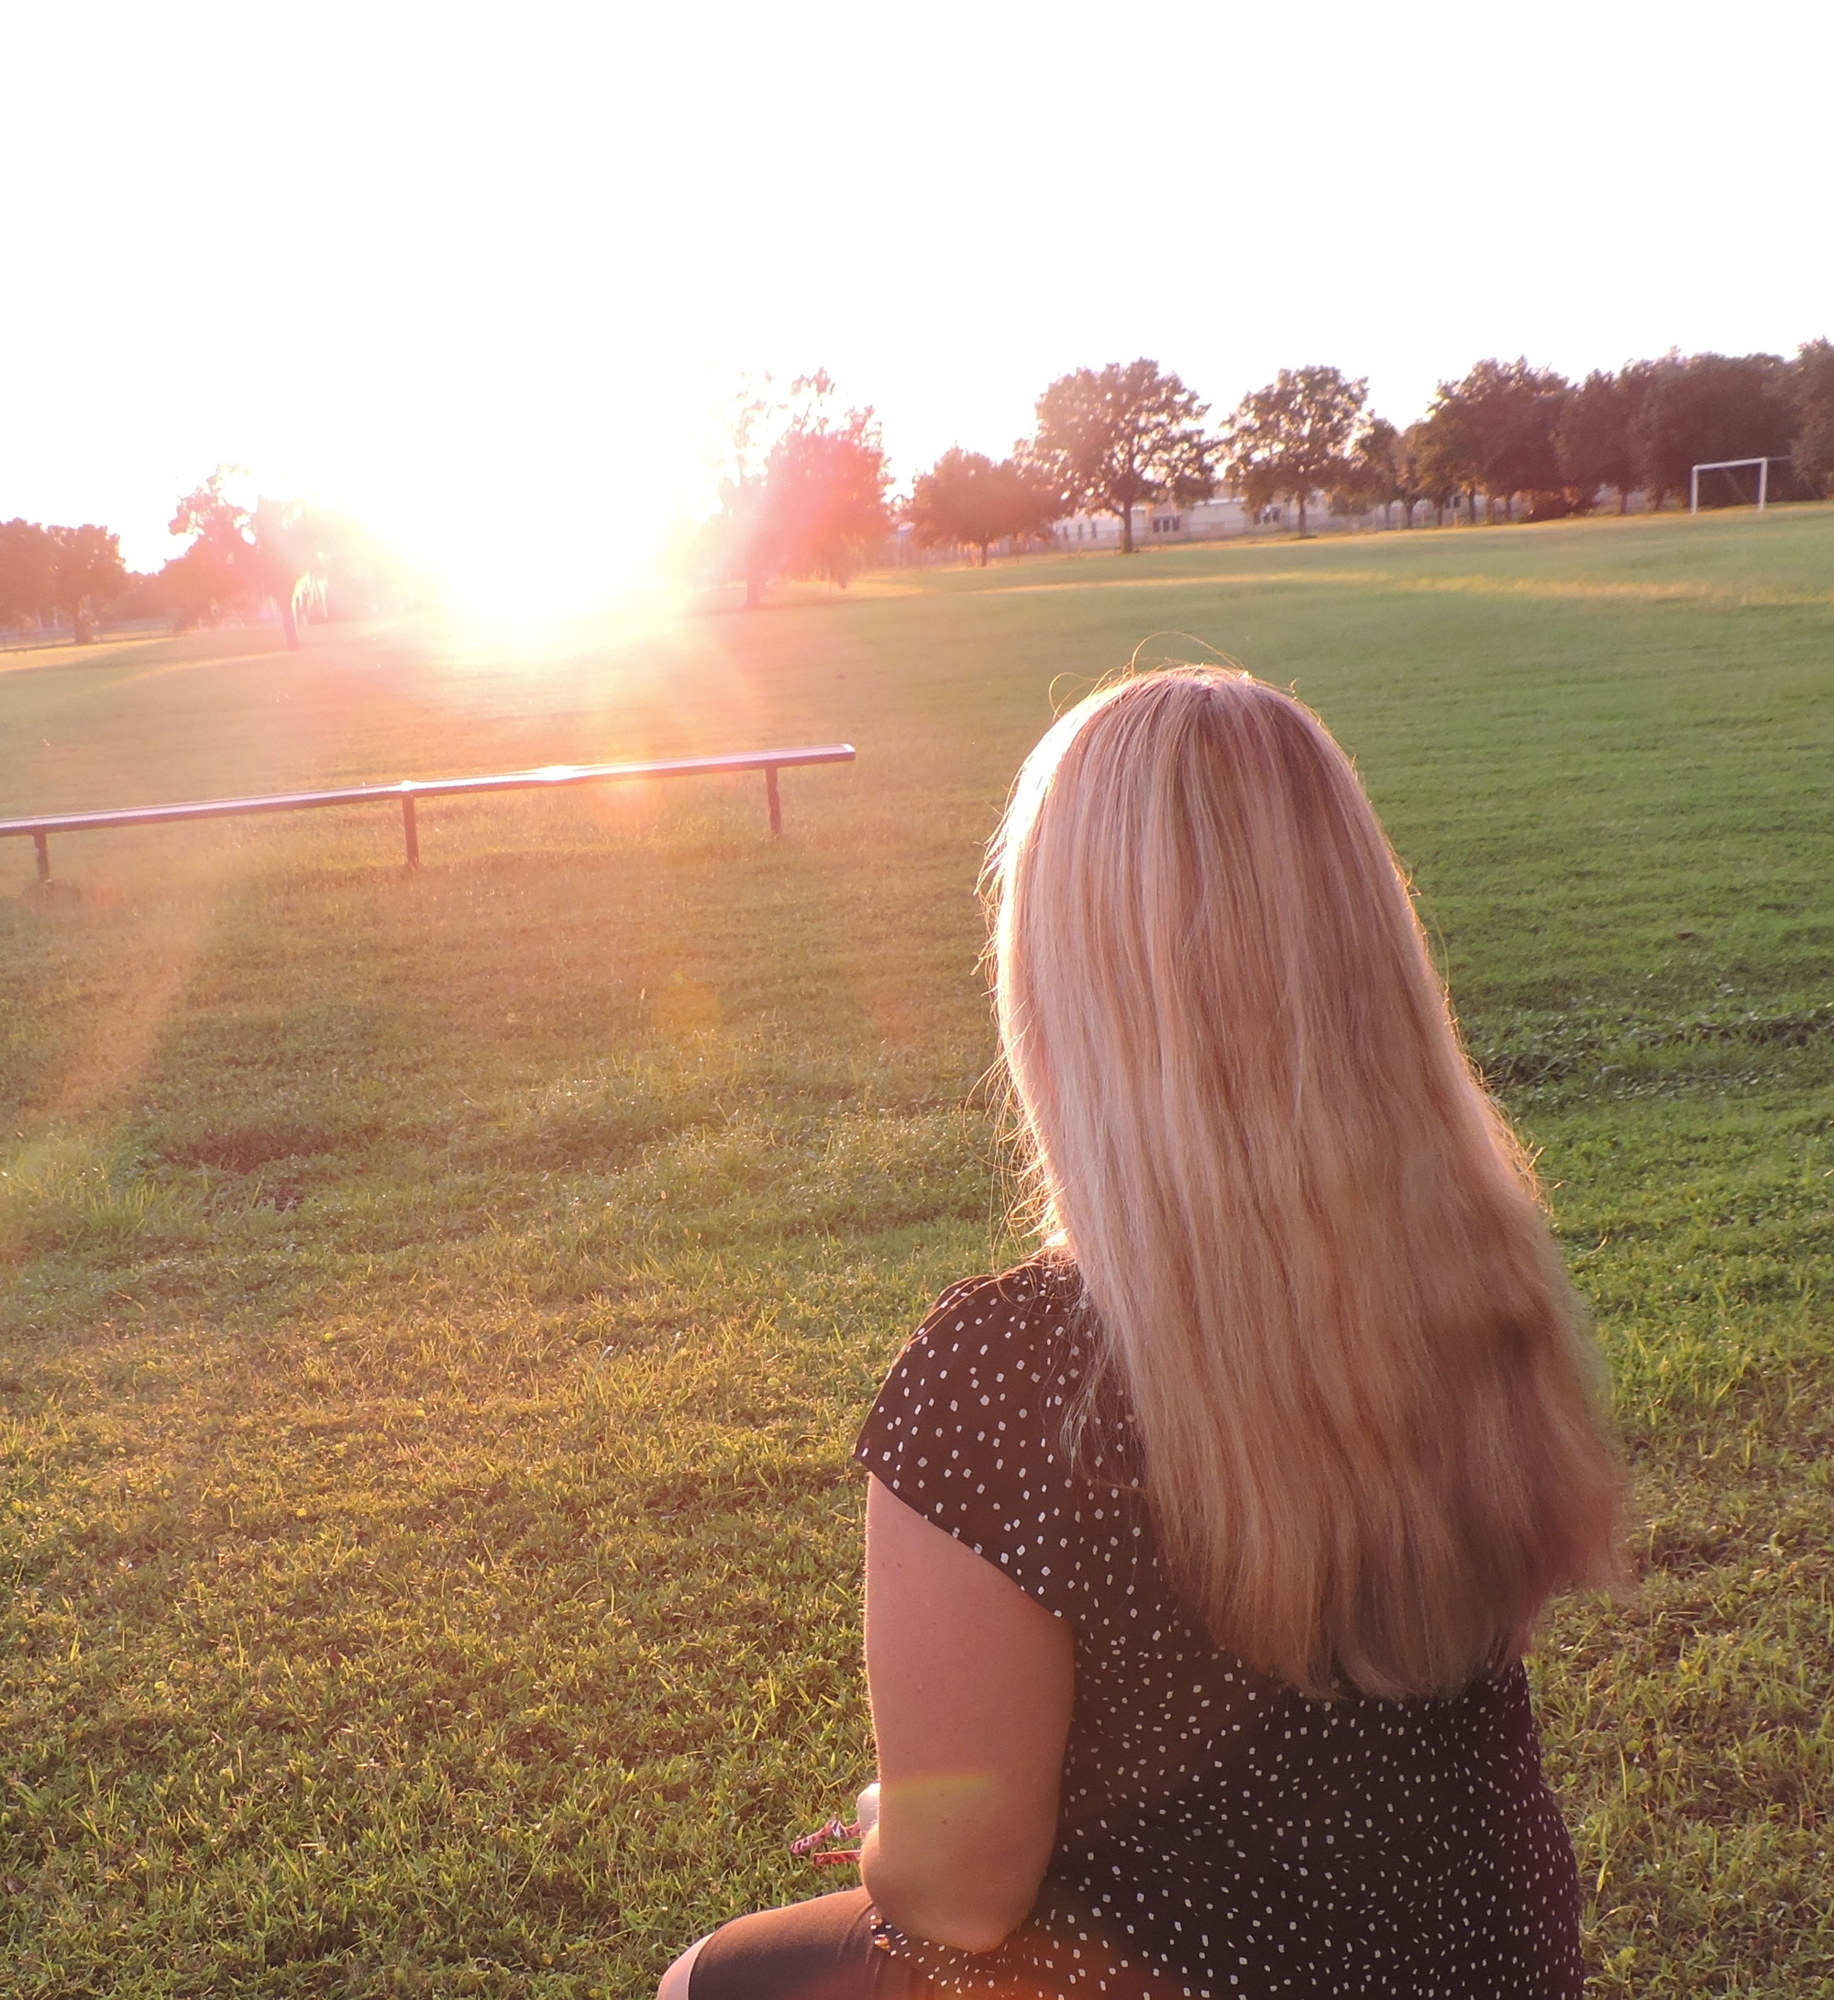 Sunset always has been one of Rachel Weeks' favorite sights.